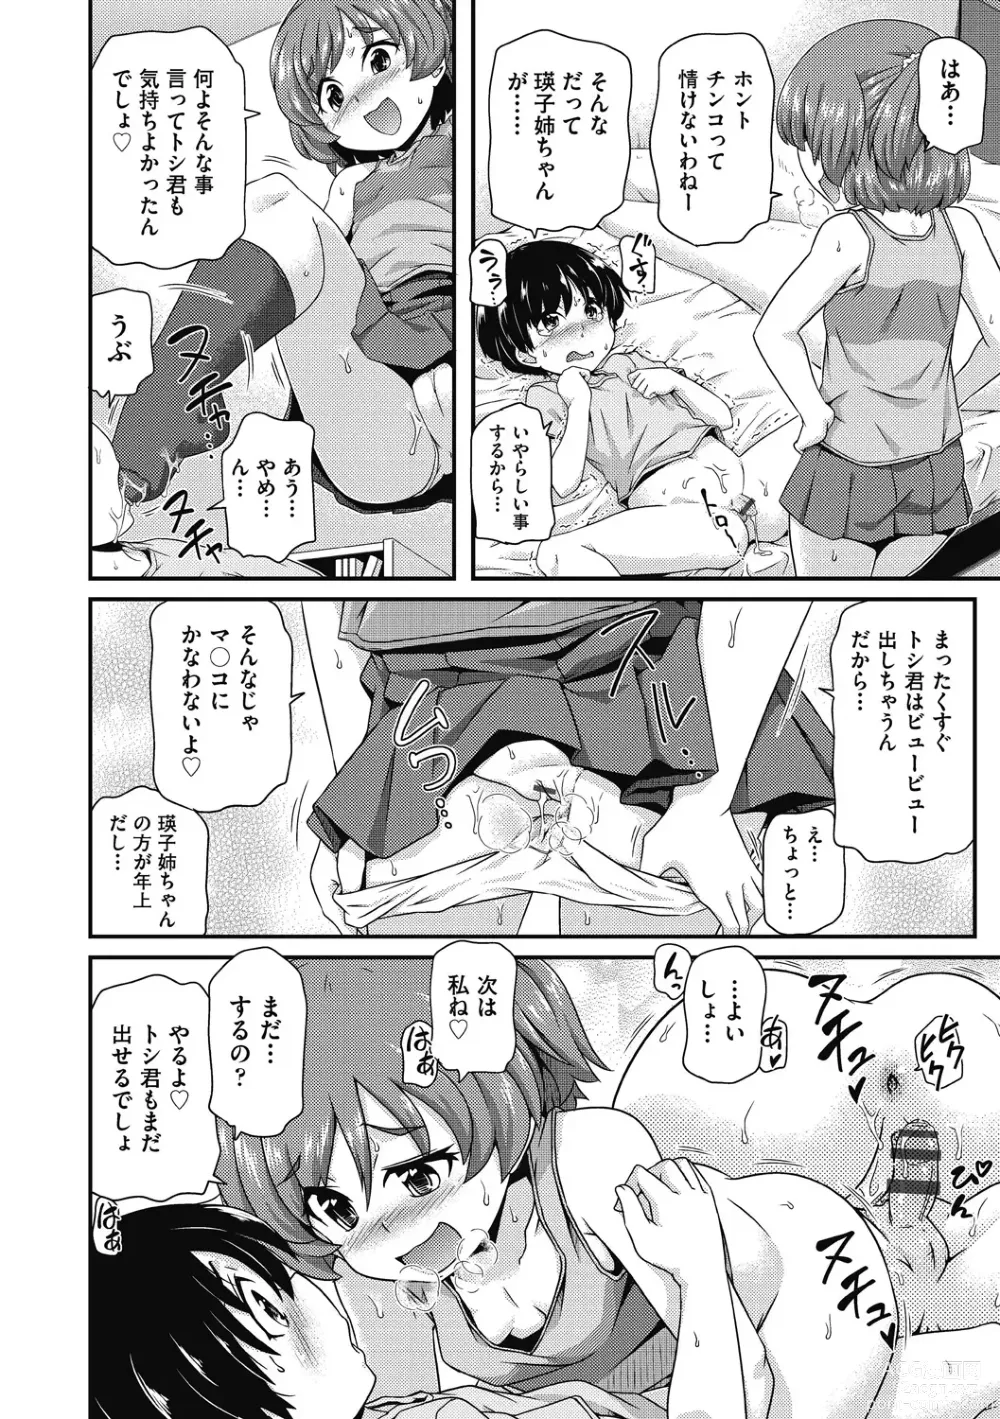 Page 6 of manga Chiisame Vacance